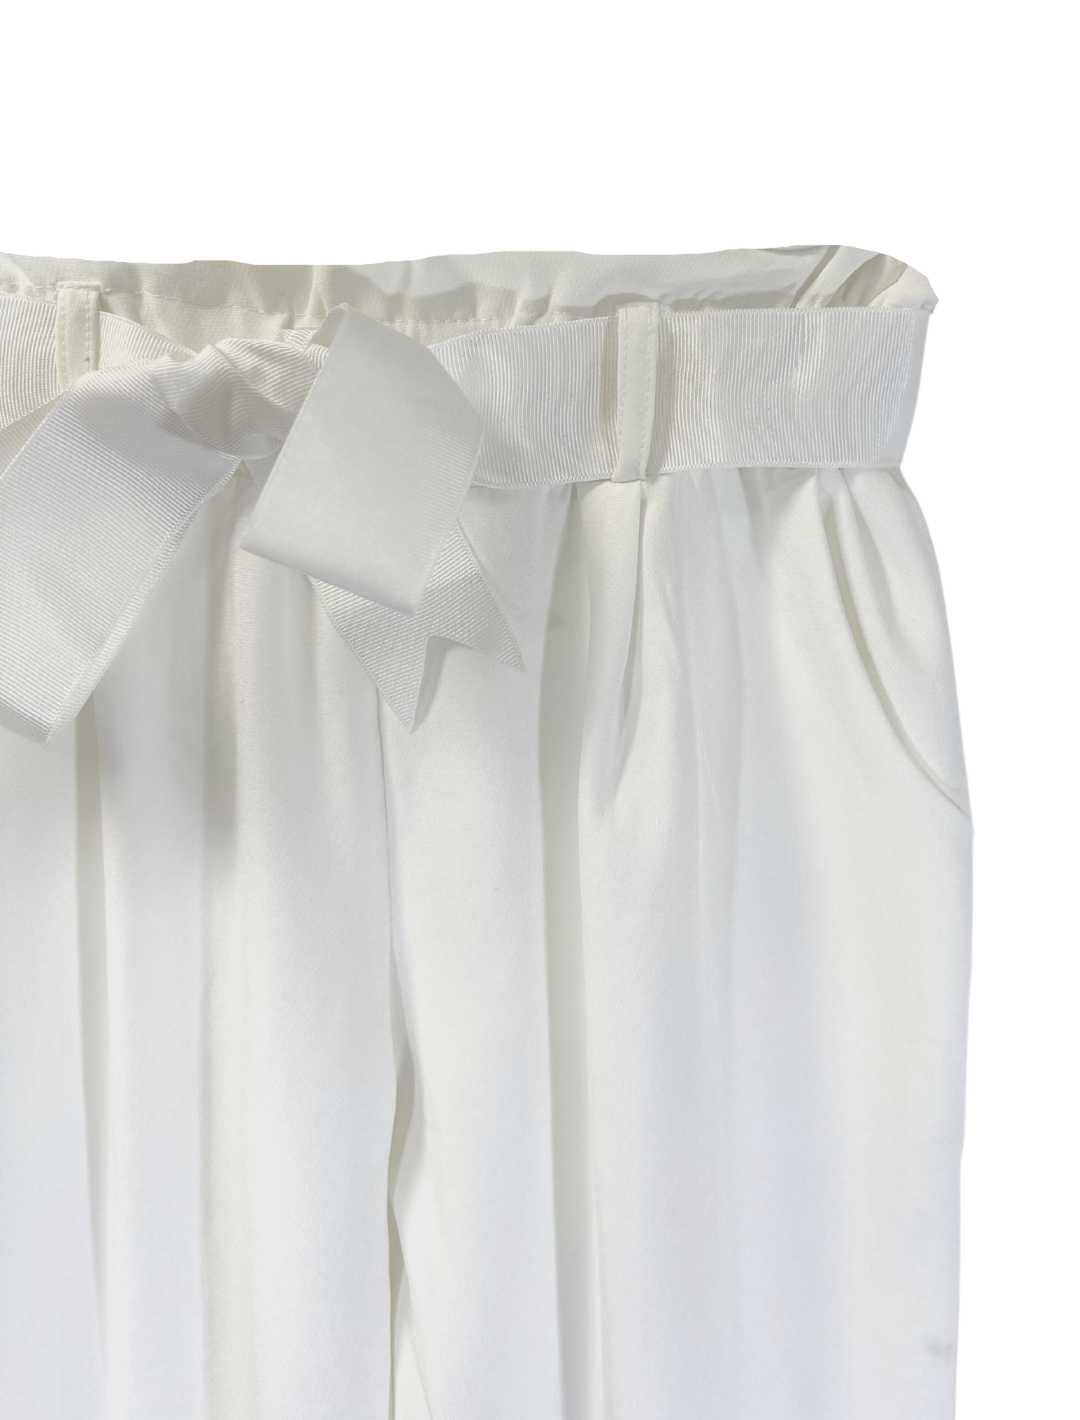 InCity Girls Tween 7-14 Years White Ribbon Belt Elastic Waist Straight Leg Comfy Fashion Dress Pants InCity Boys Girls